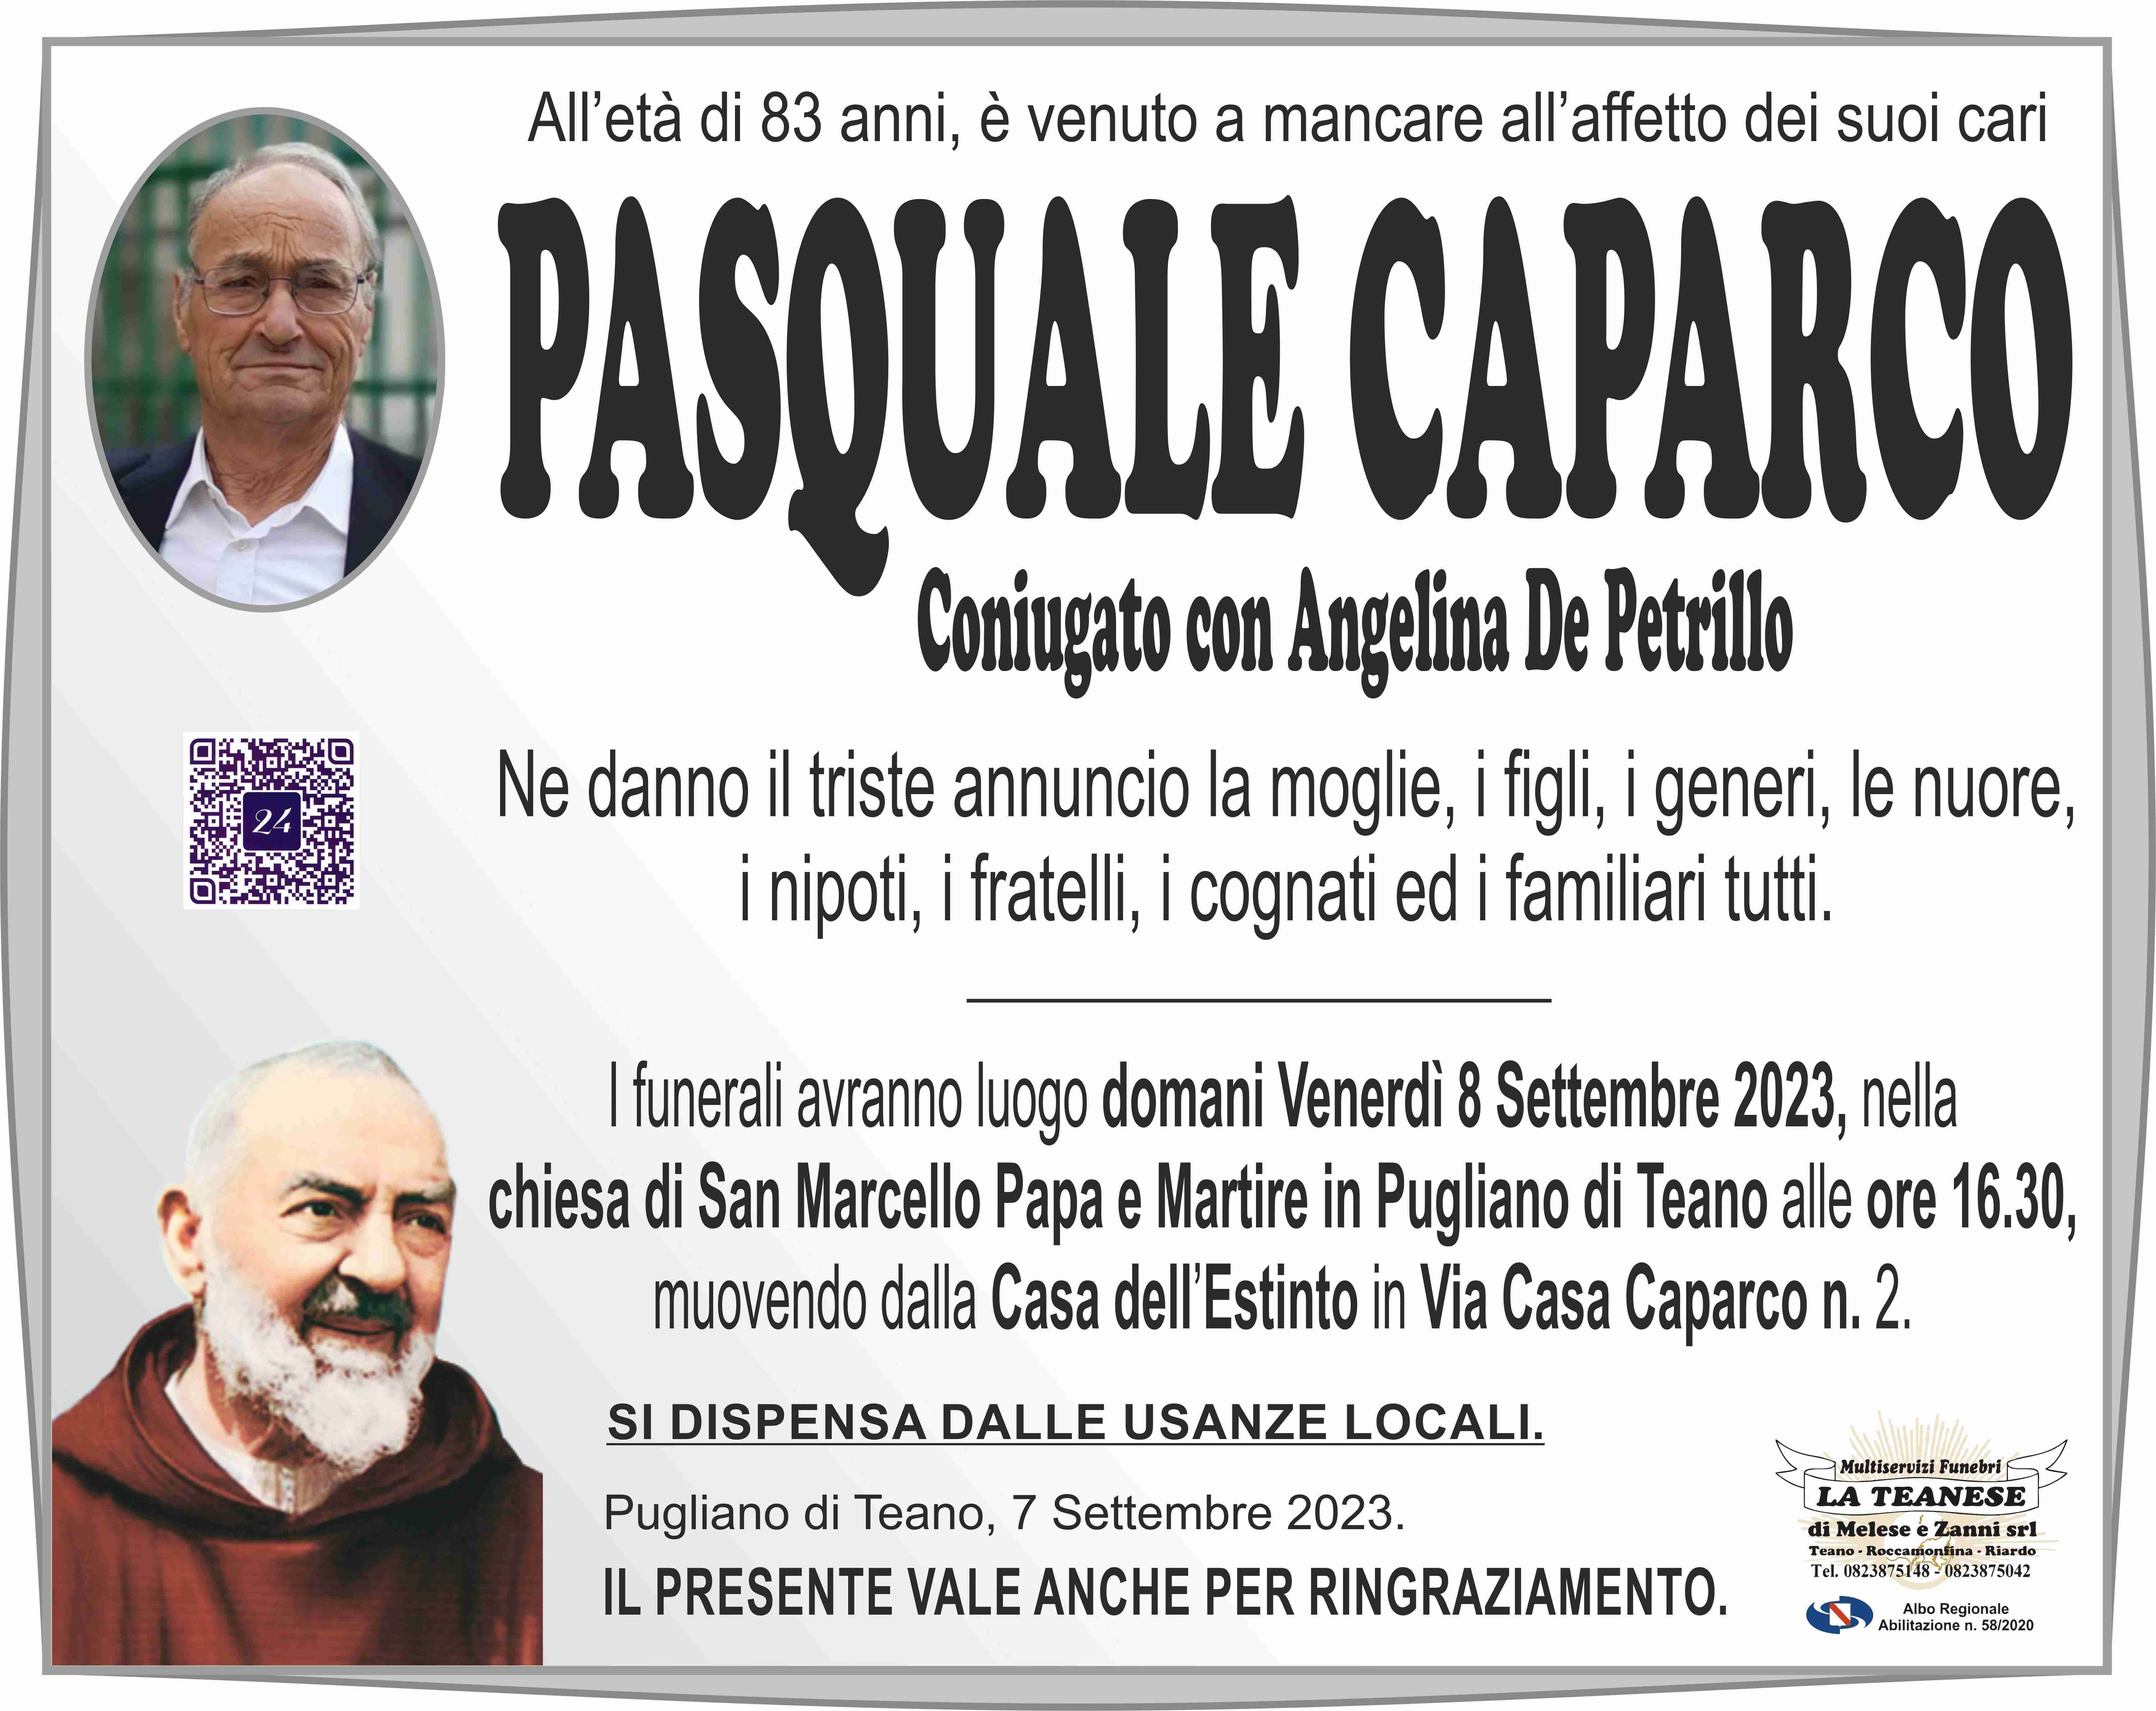 Pasquale Caparco